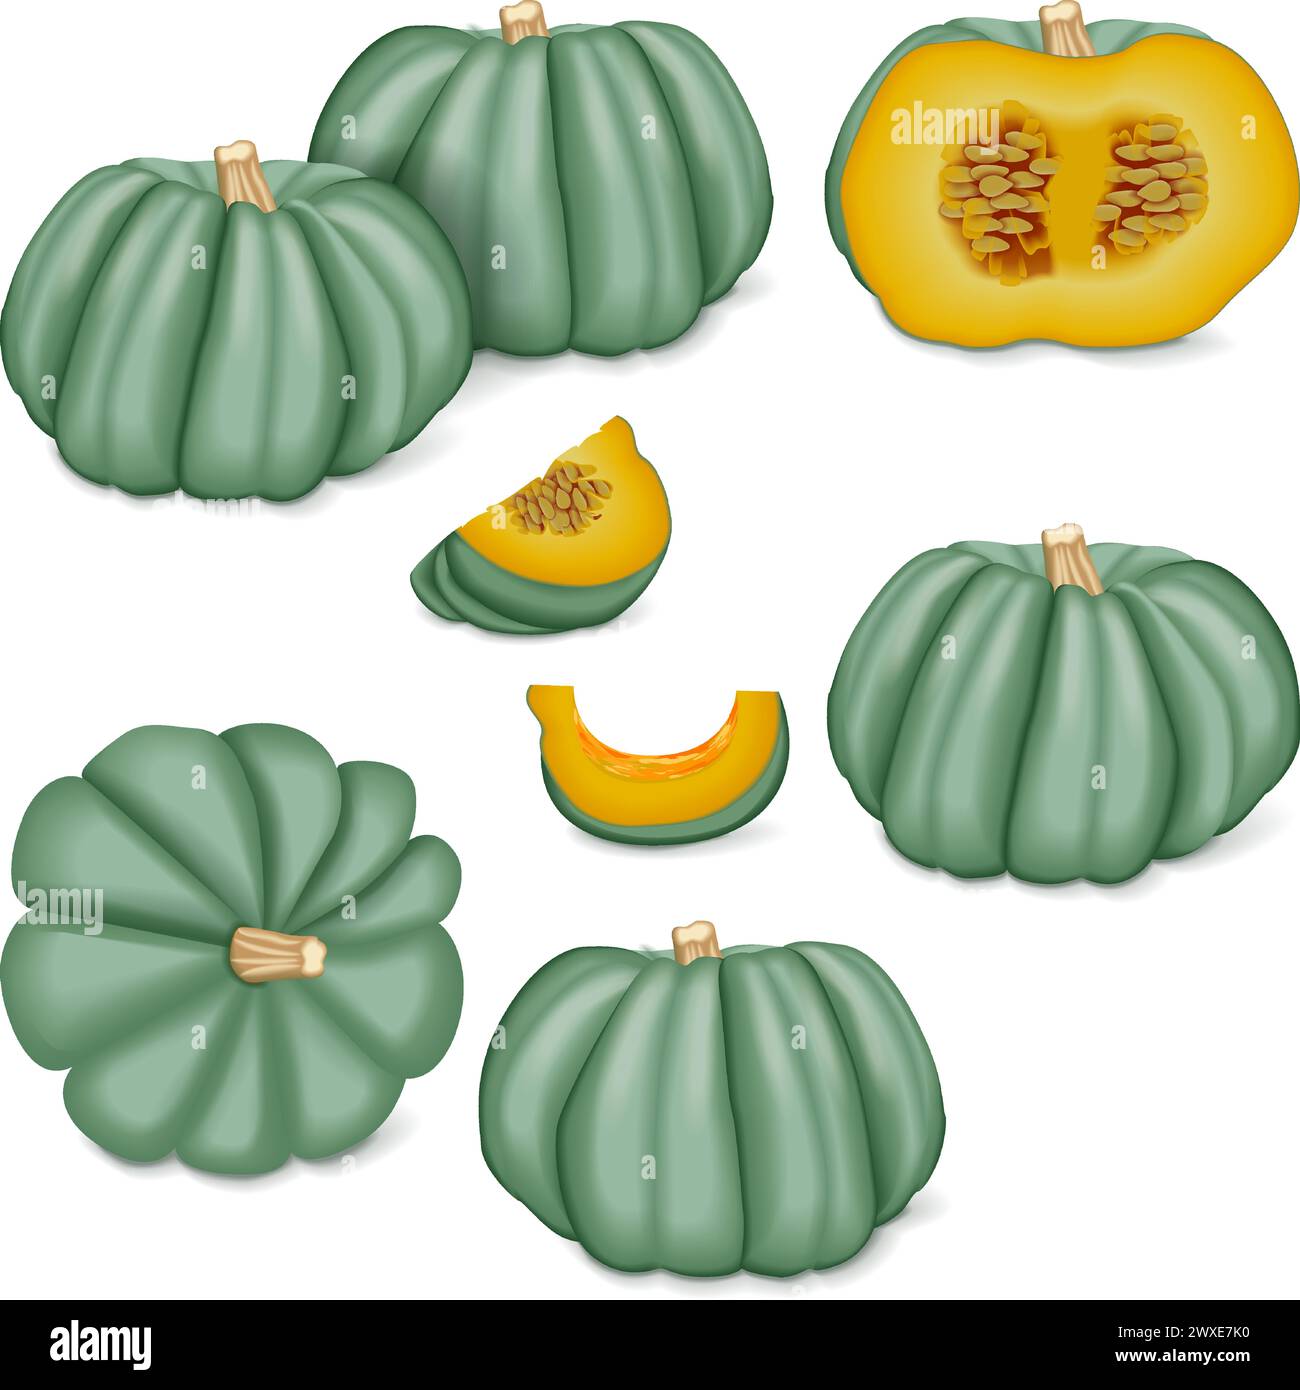 Clip art. Blue pumpkin. Winter squash. Cucurbita maxima. Fruits and vegetables. Isolated vector illustration. Stock Vector